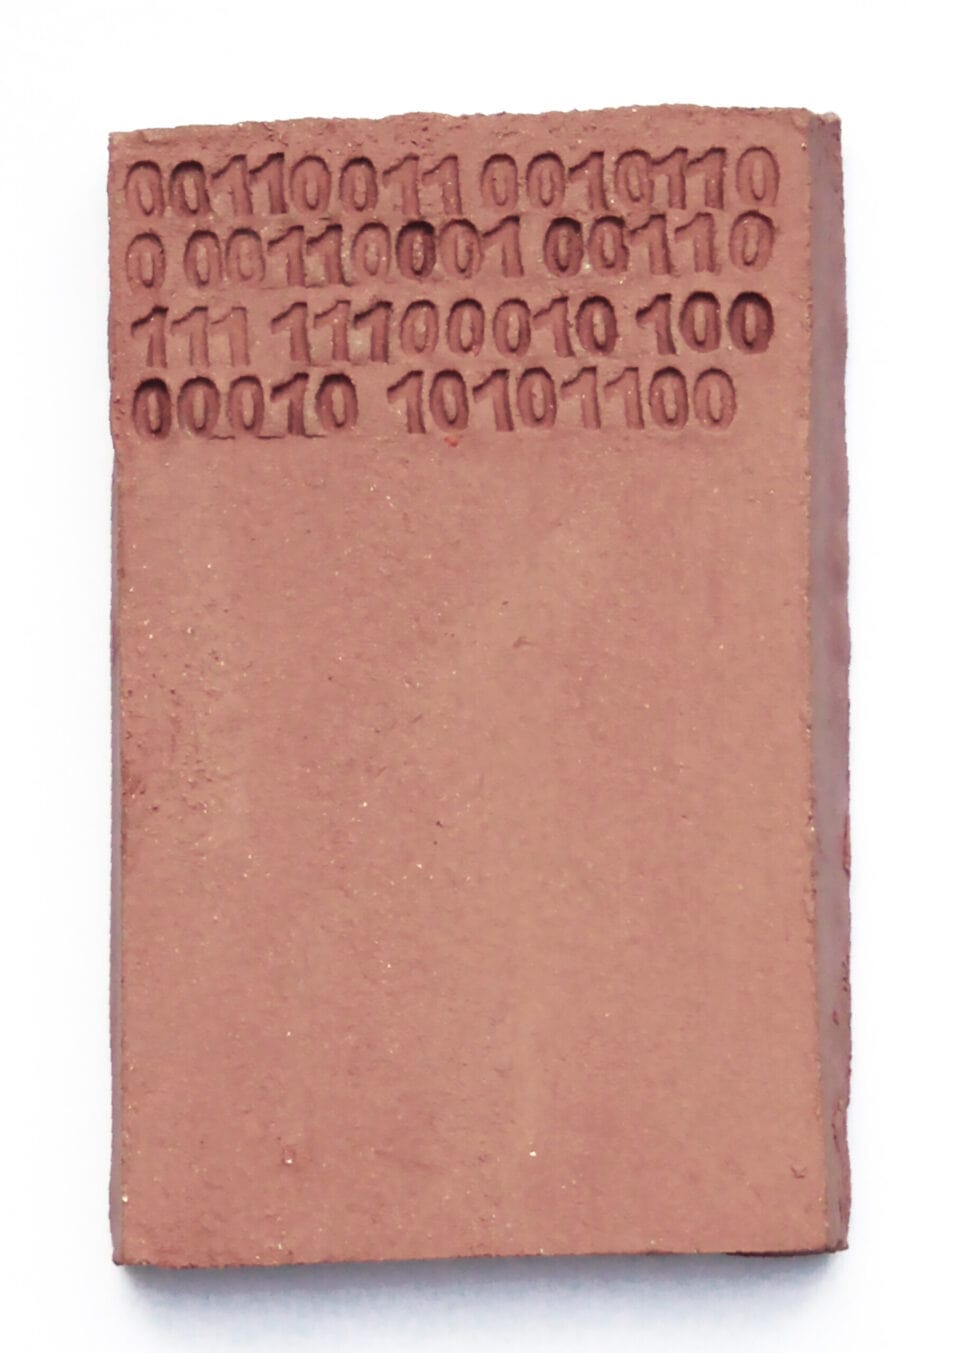 Tablette binaire terre cuite verso 13x85 cm 2022